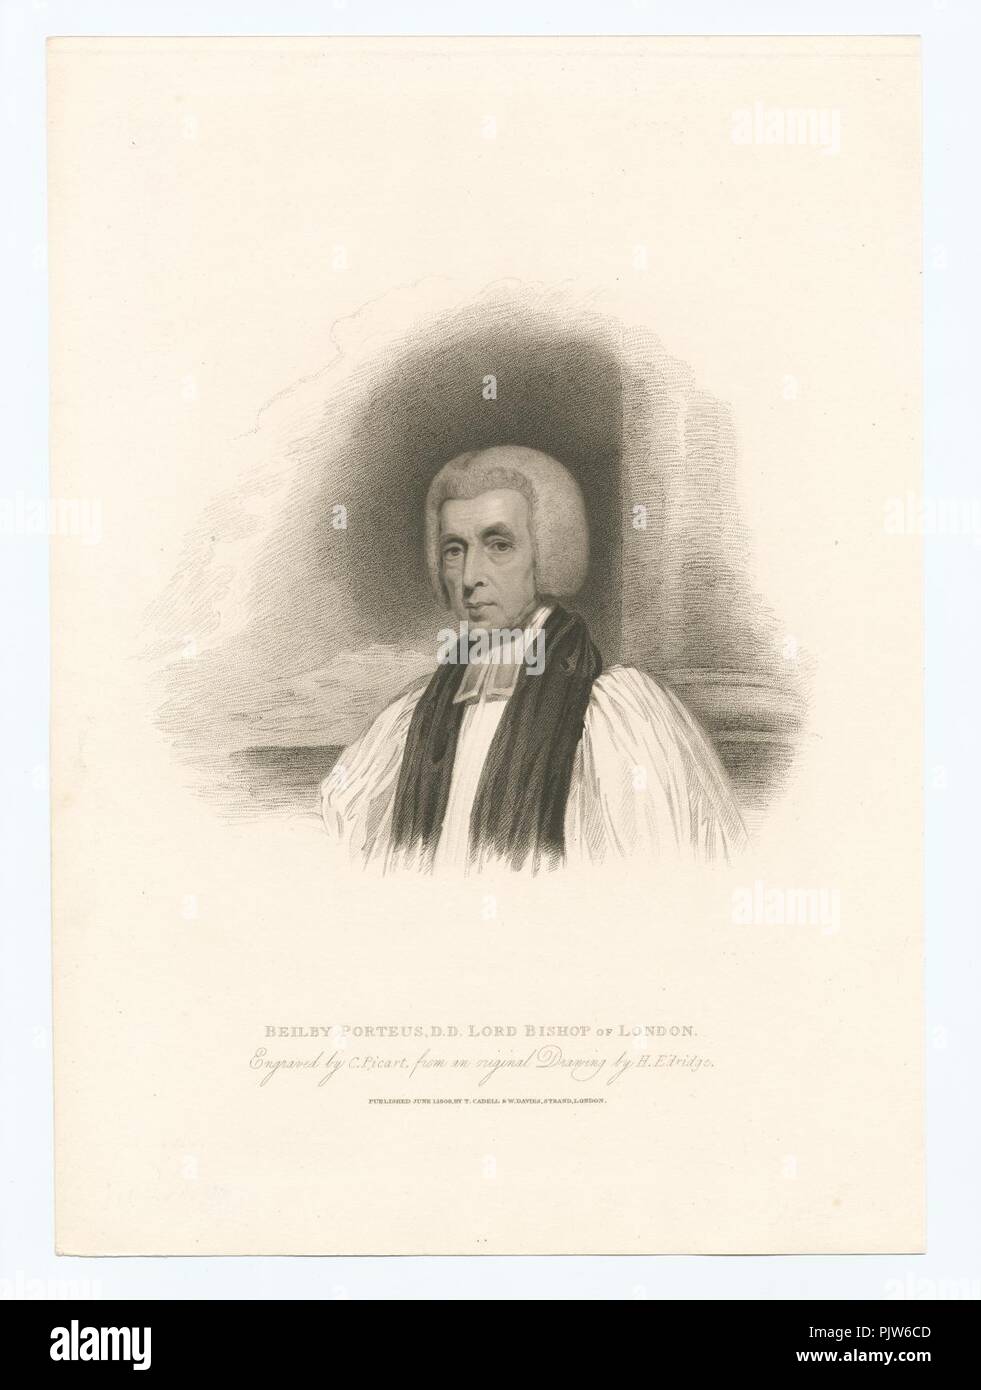 Beilby Porteus, D.D. Signore vescovo di Londra Foto Stock